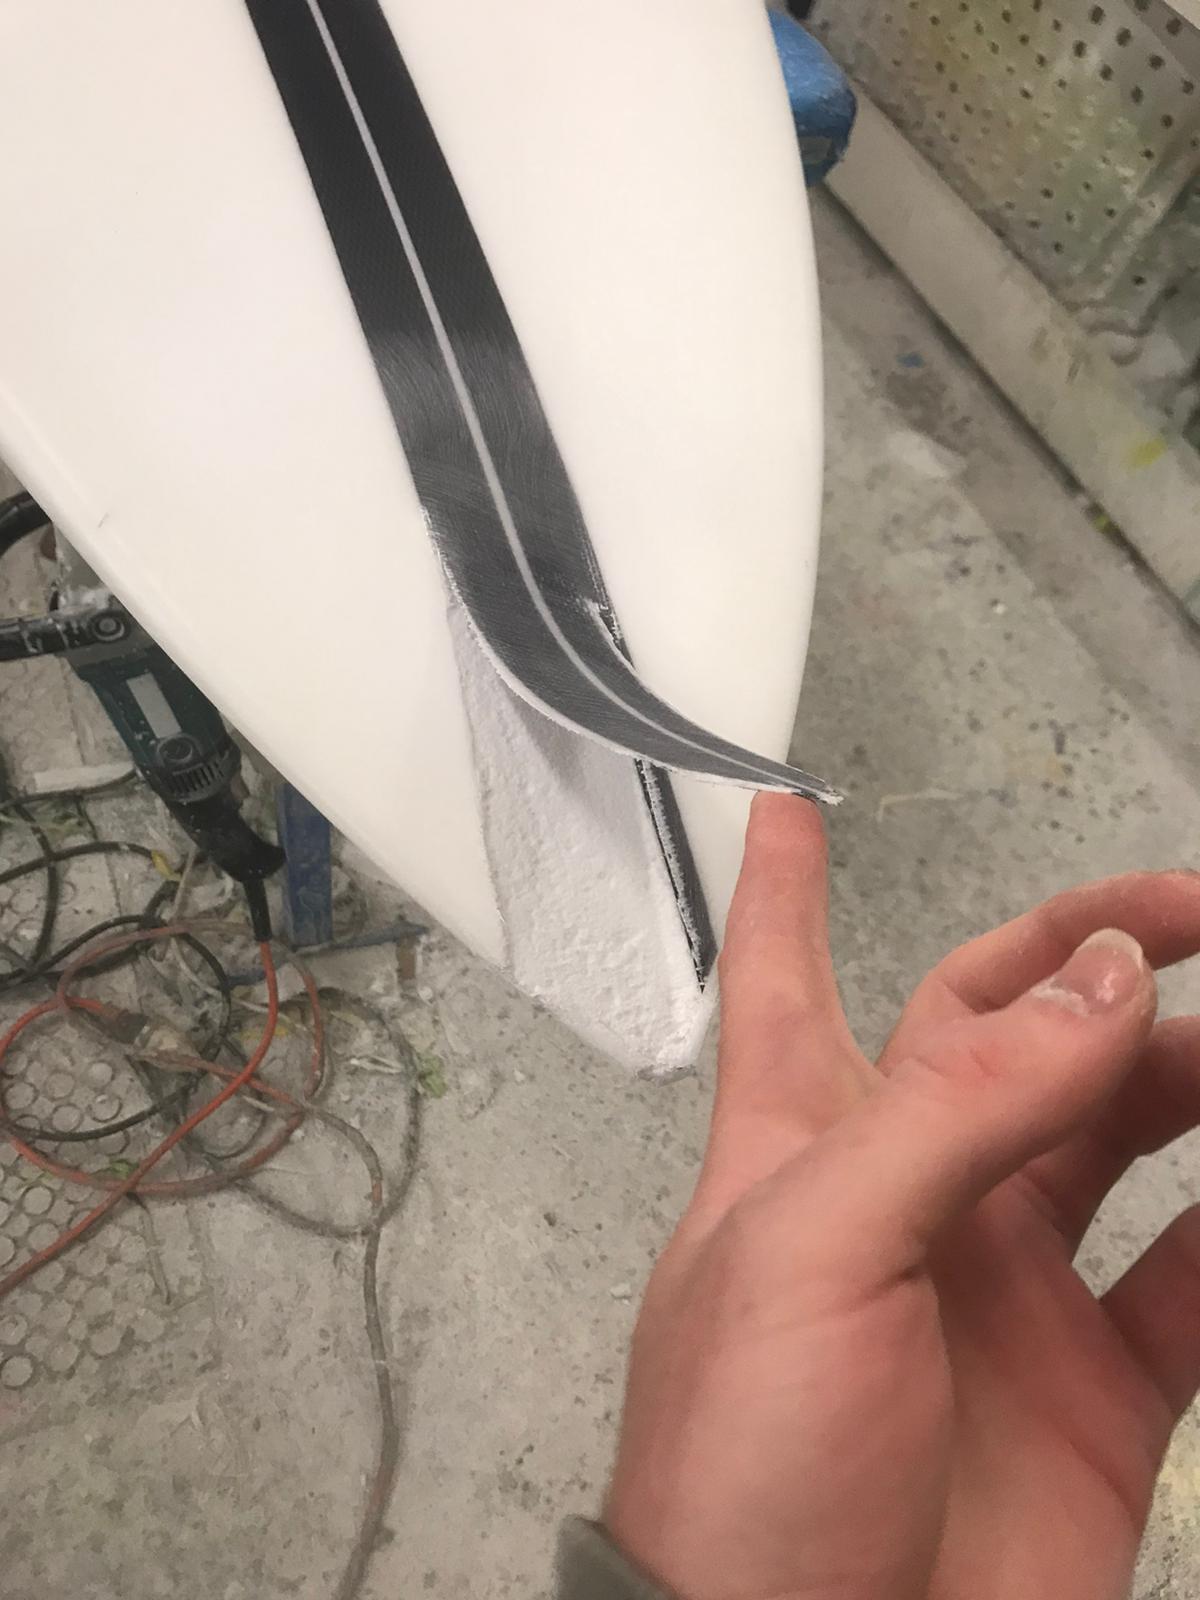 Image from Melbourne Surfboard Repairs - Surfboard Delamination Repair.